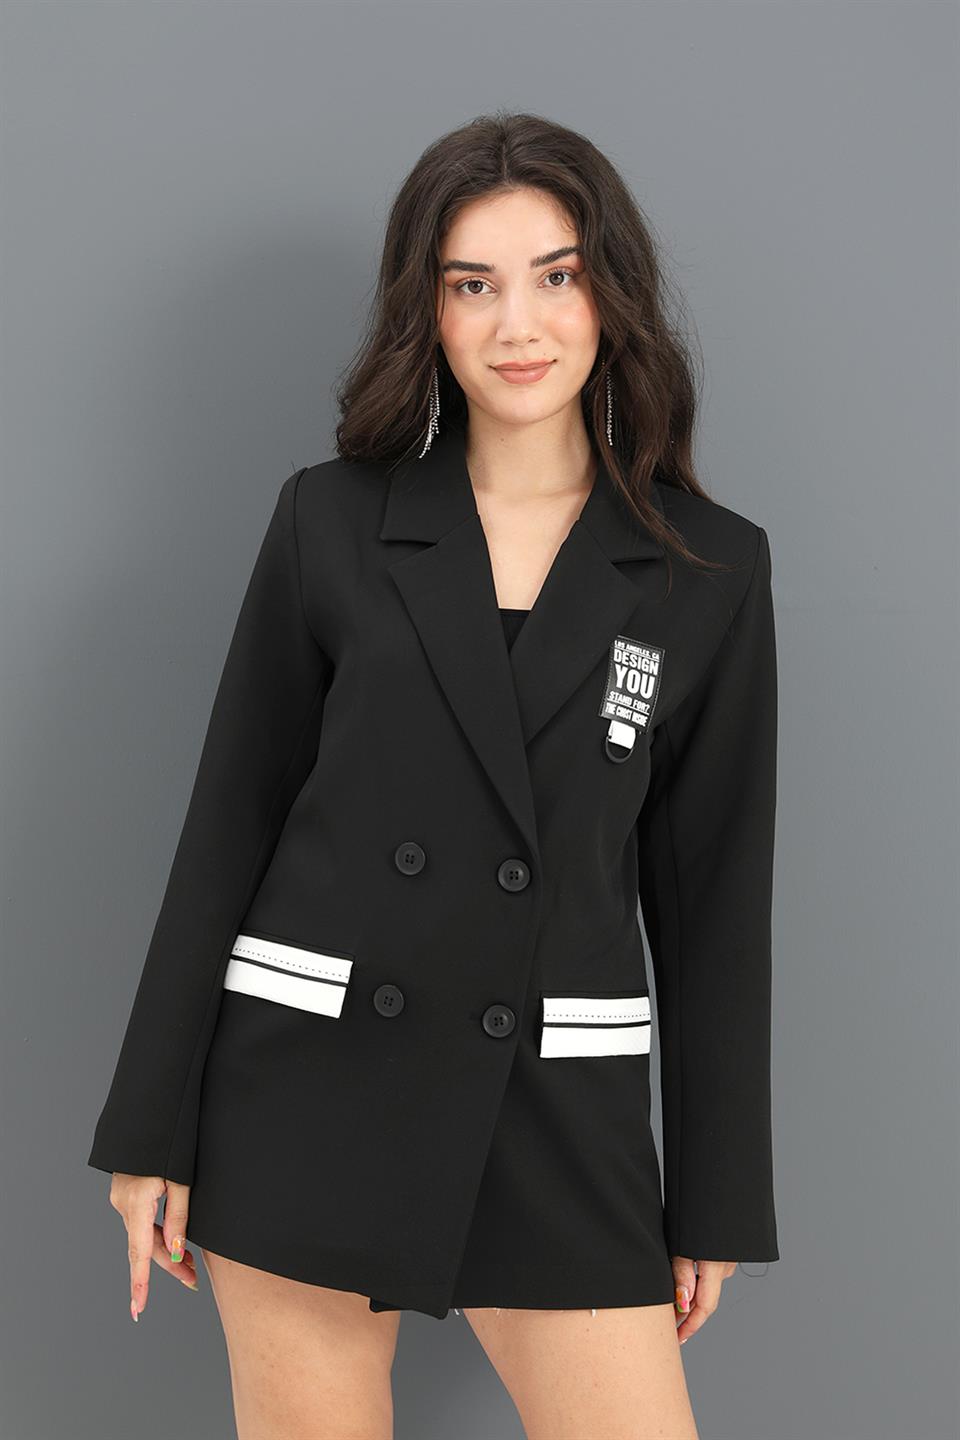 Women's Jacket Pocket Cover Garnish Atlas Fabric - Black - STREETMODE™